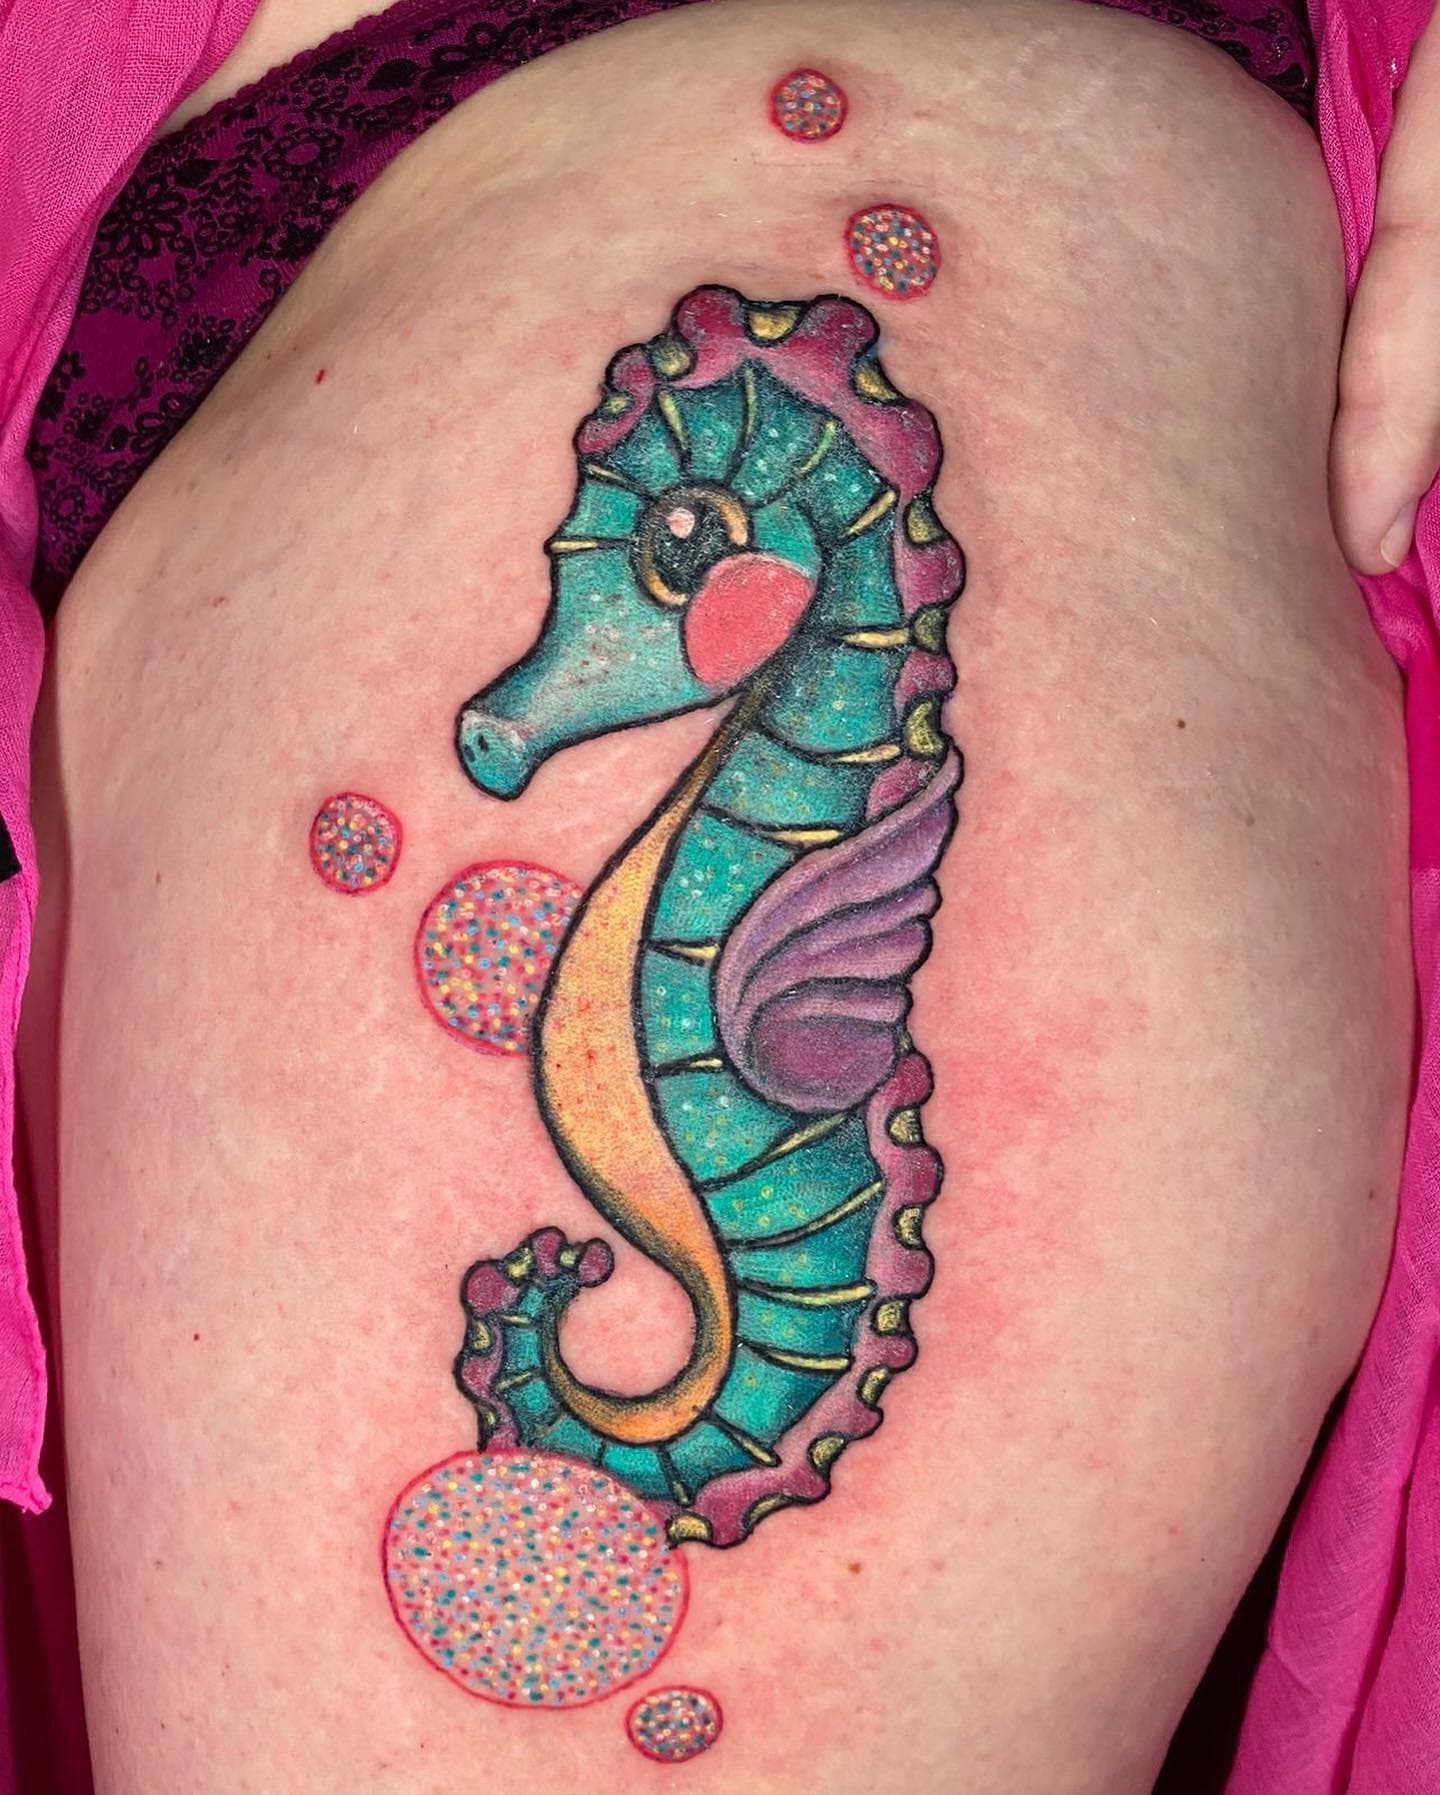 Tatuaje de un caballito de mar de color rosa brillante